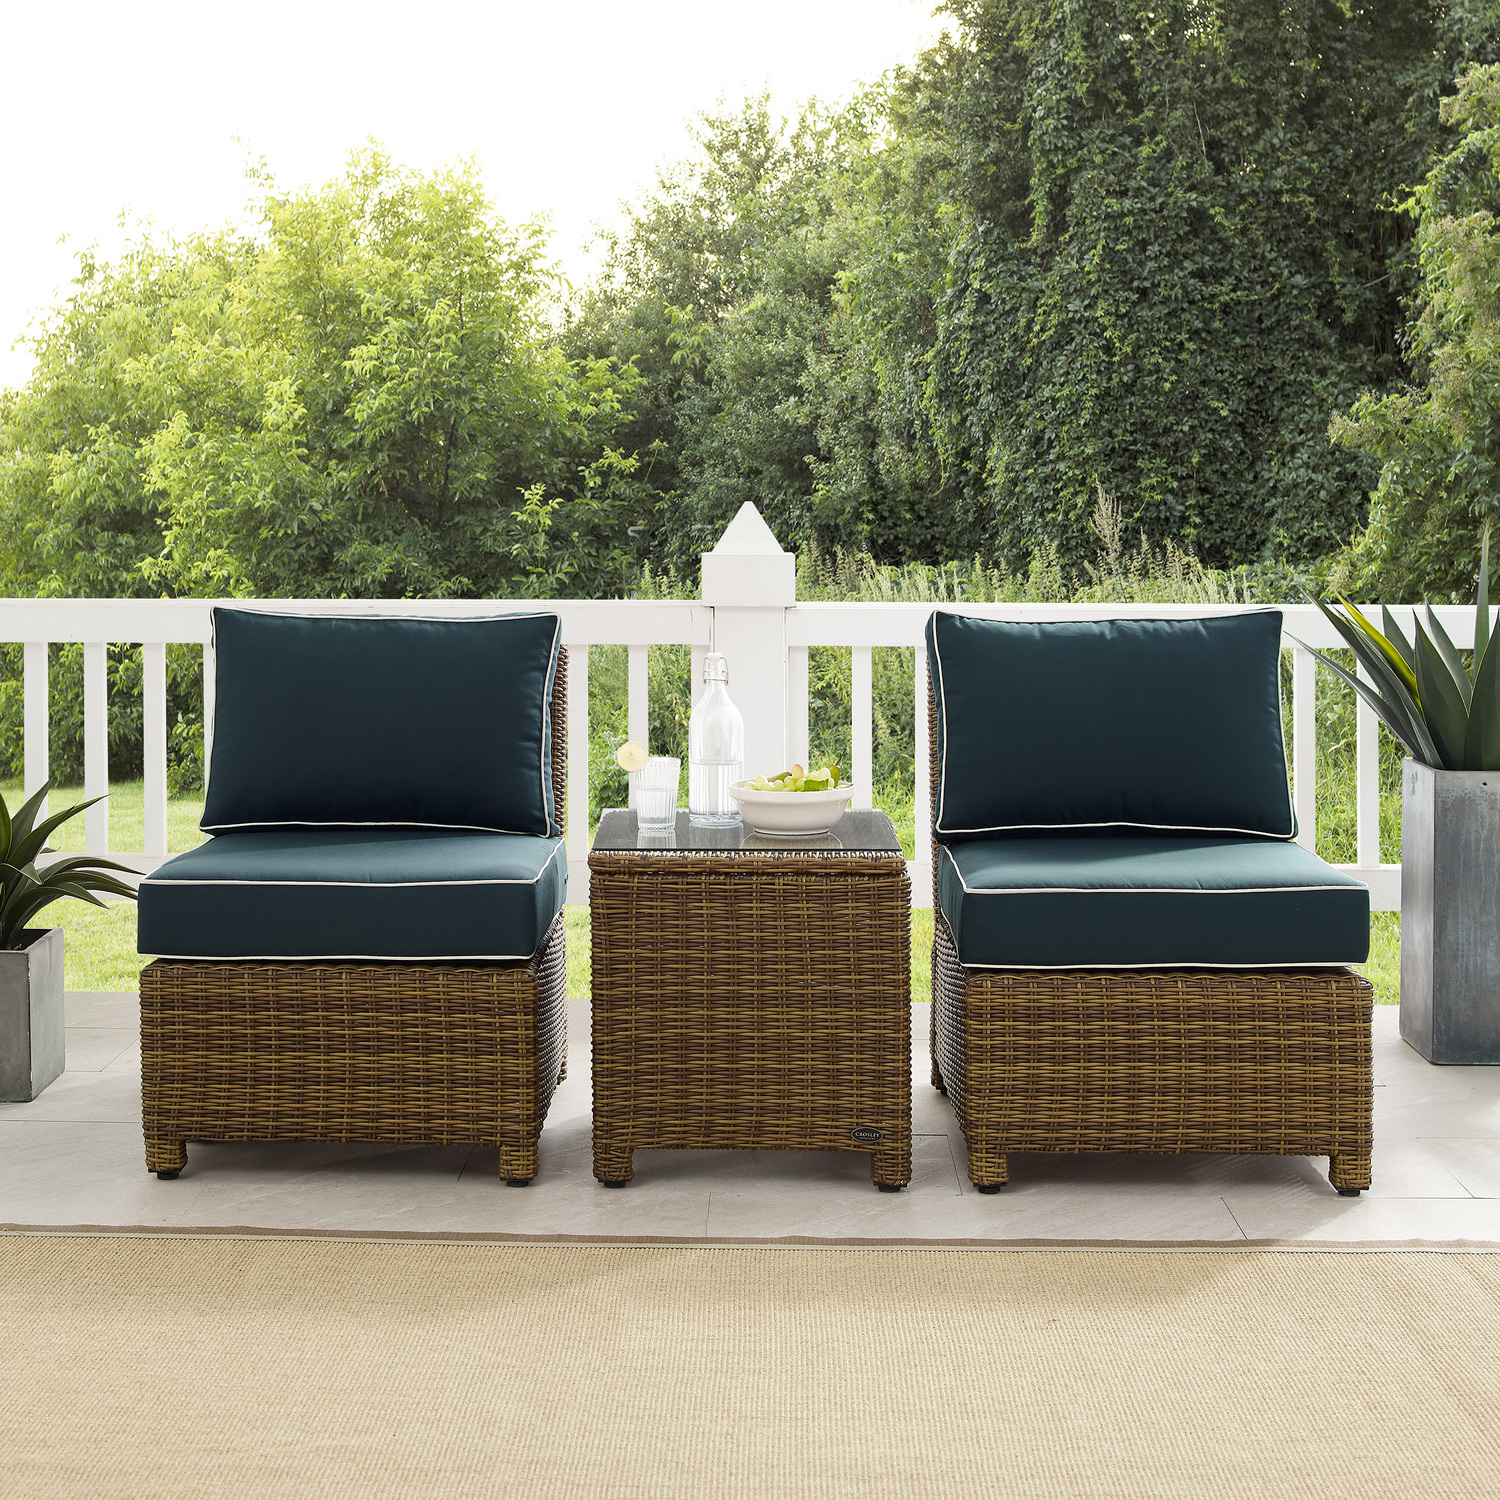 Crosley Furniture Bradenton 3PC Wicker & Fabric Outdoor Chair Set in Navy/Brown - image 2 of 6